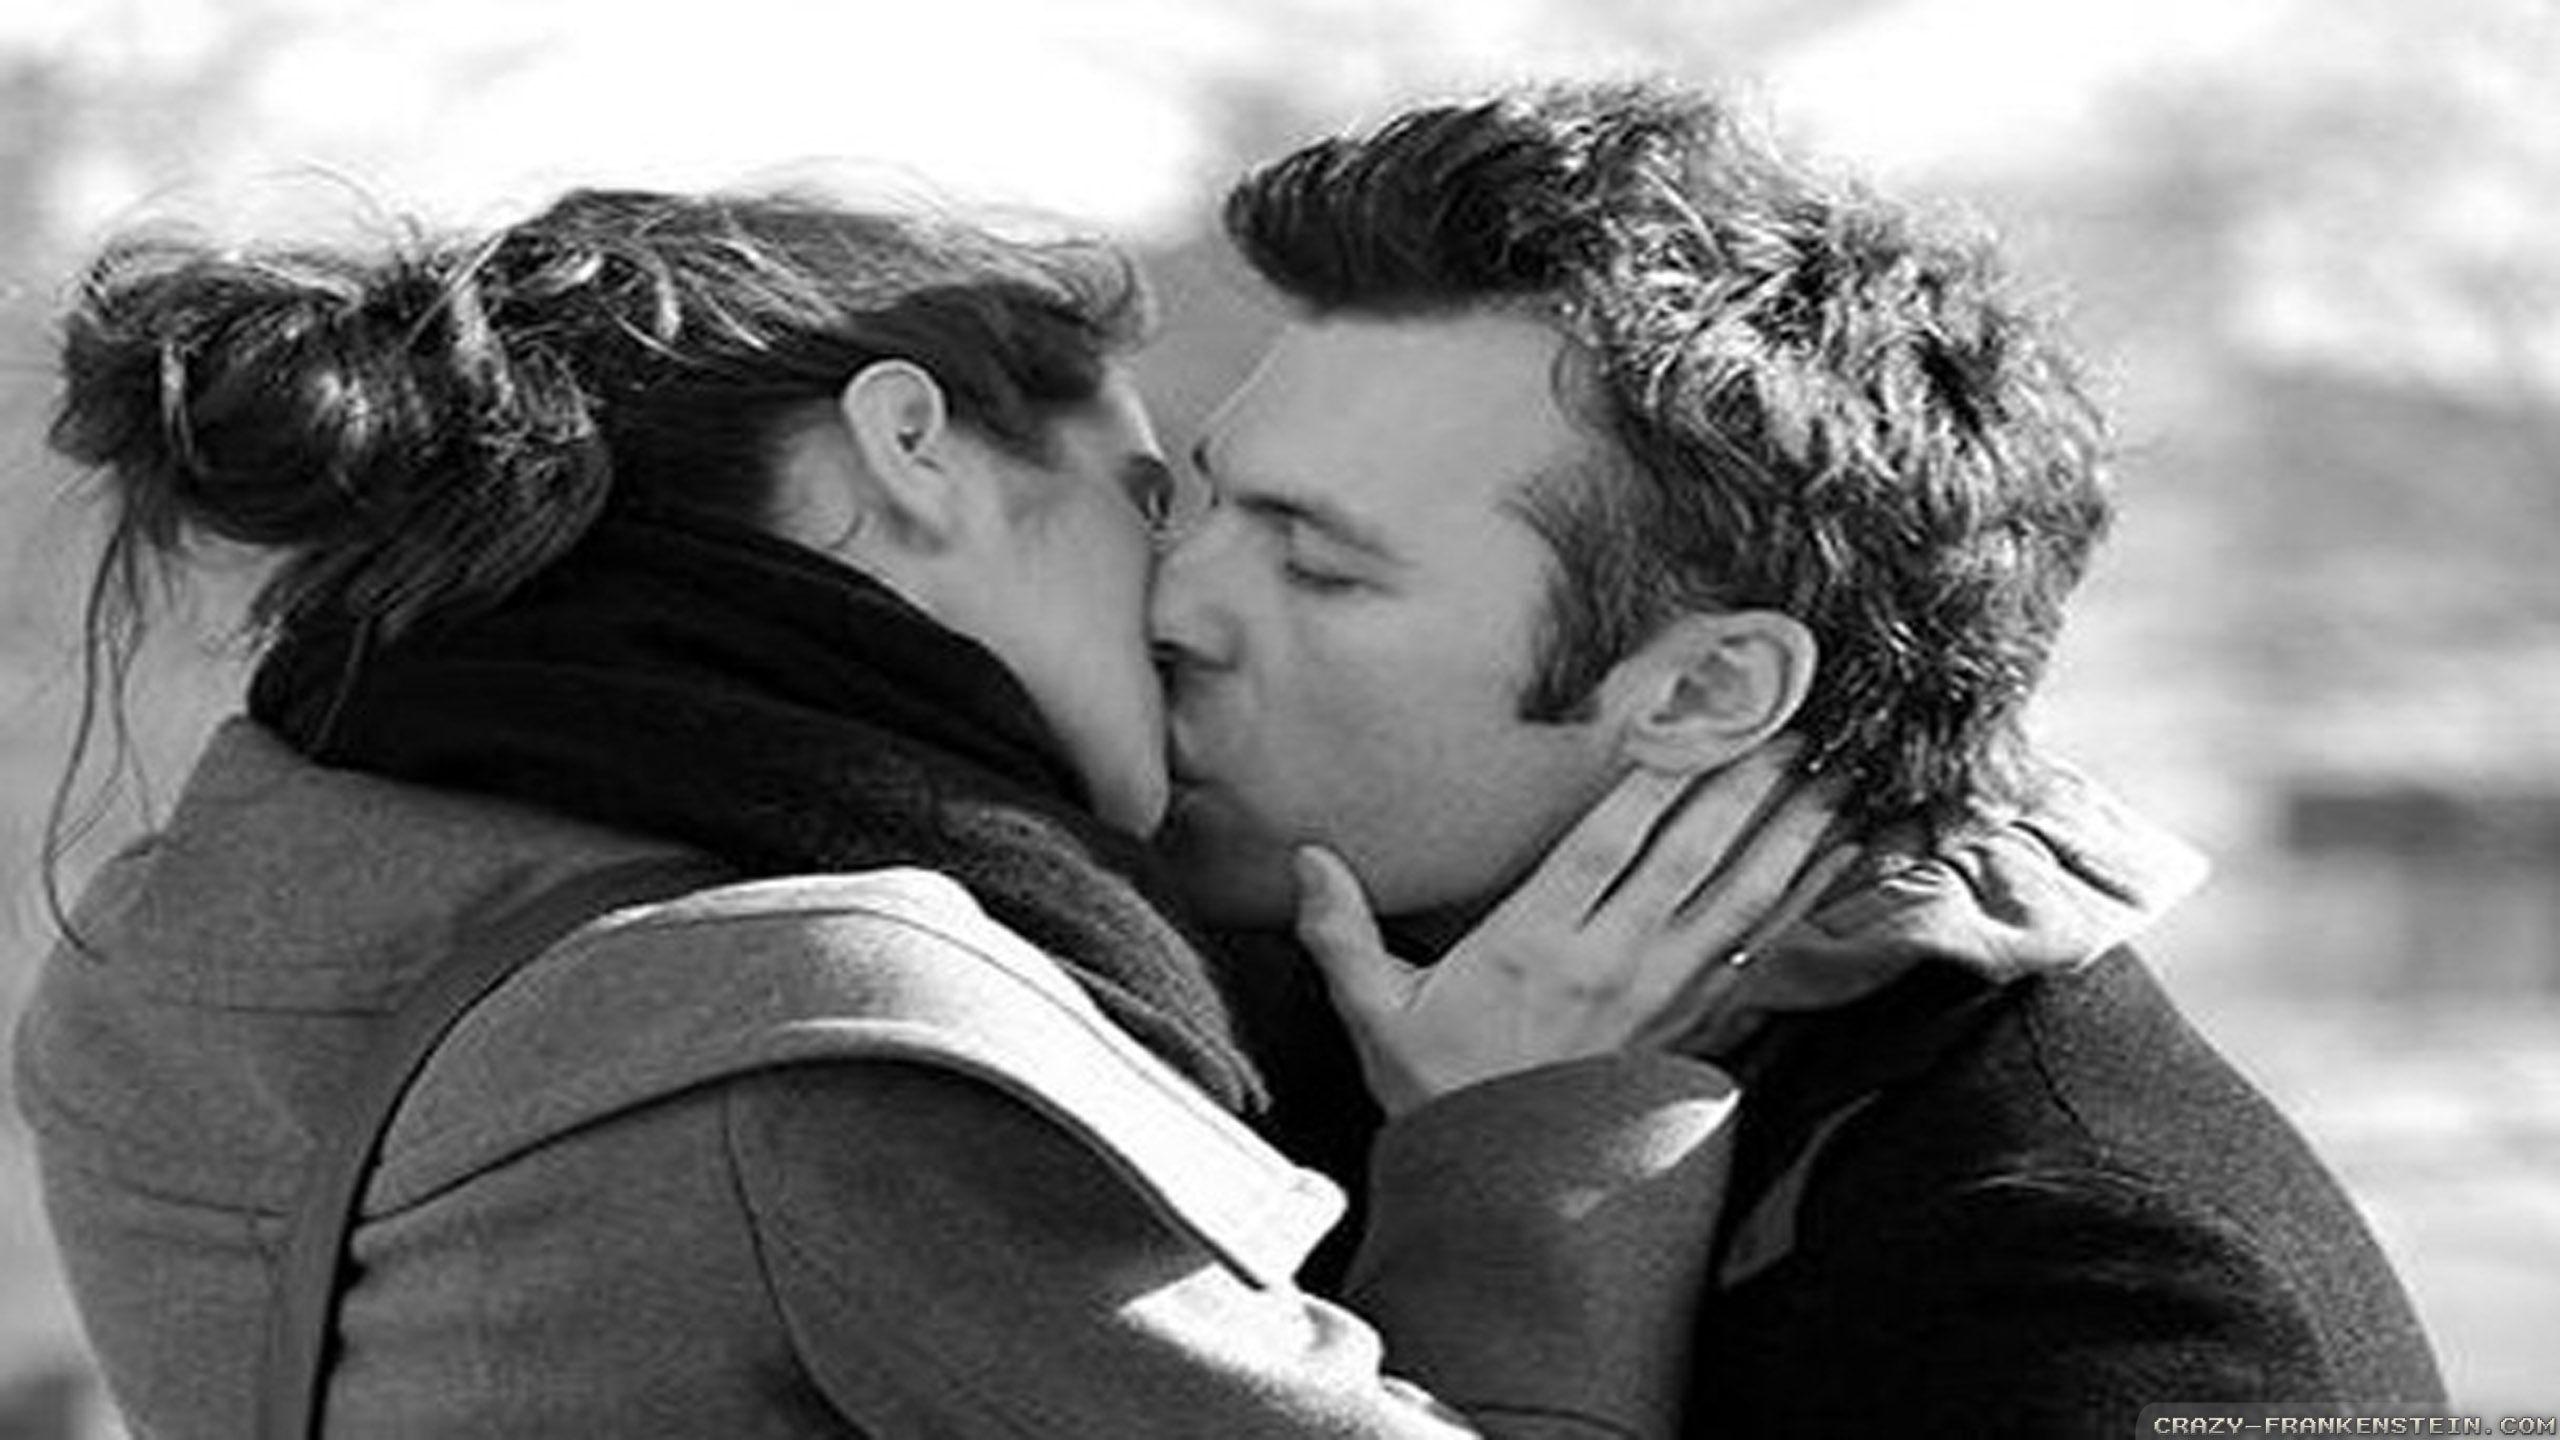 Поцелуй на прощание мы встретимся дома. Поцелуй. Красивый поцелуй. Объятия. Поцелуй фото картинки.